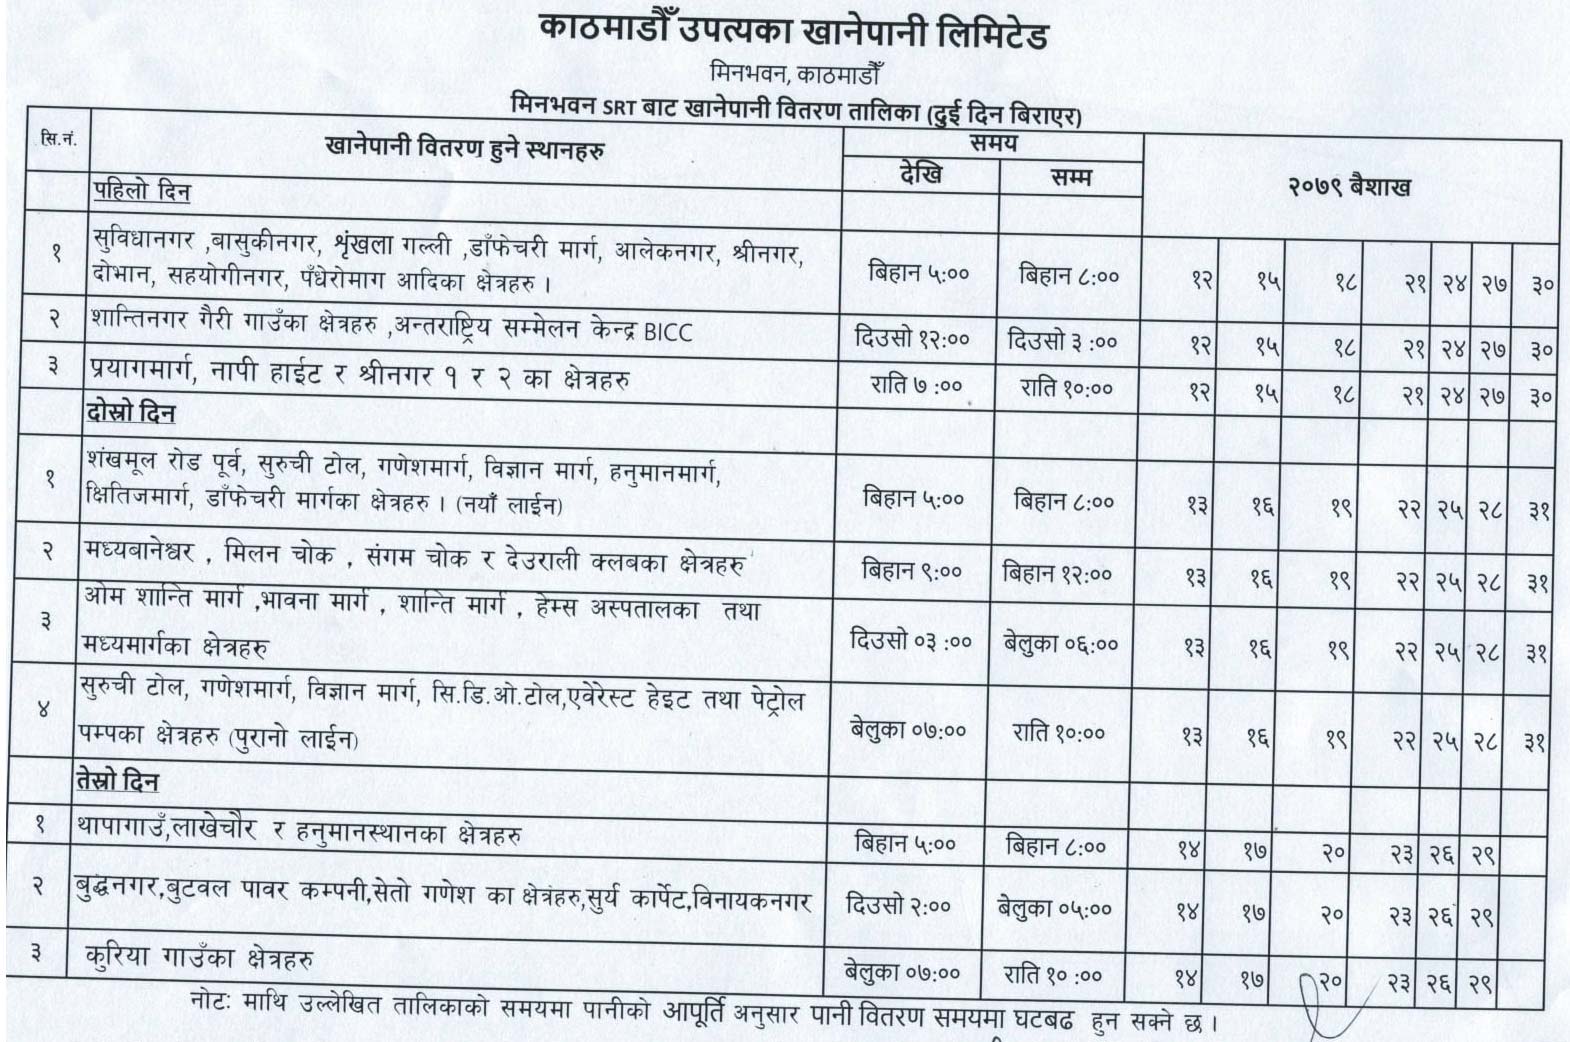 Melamchi Water Distribution Schedule in Kathmandu Valley